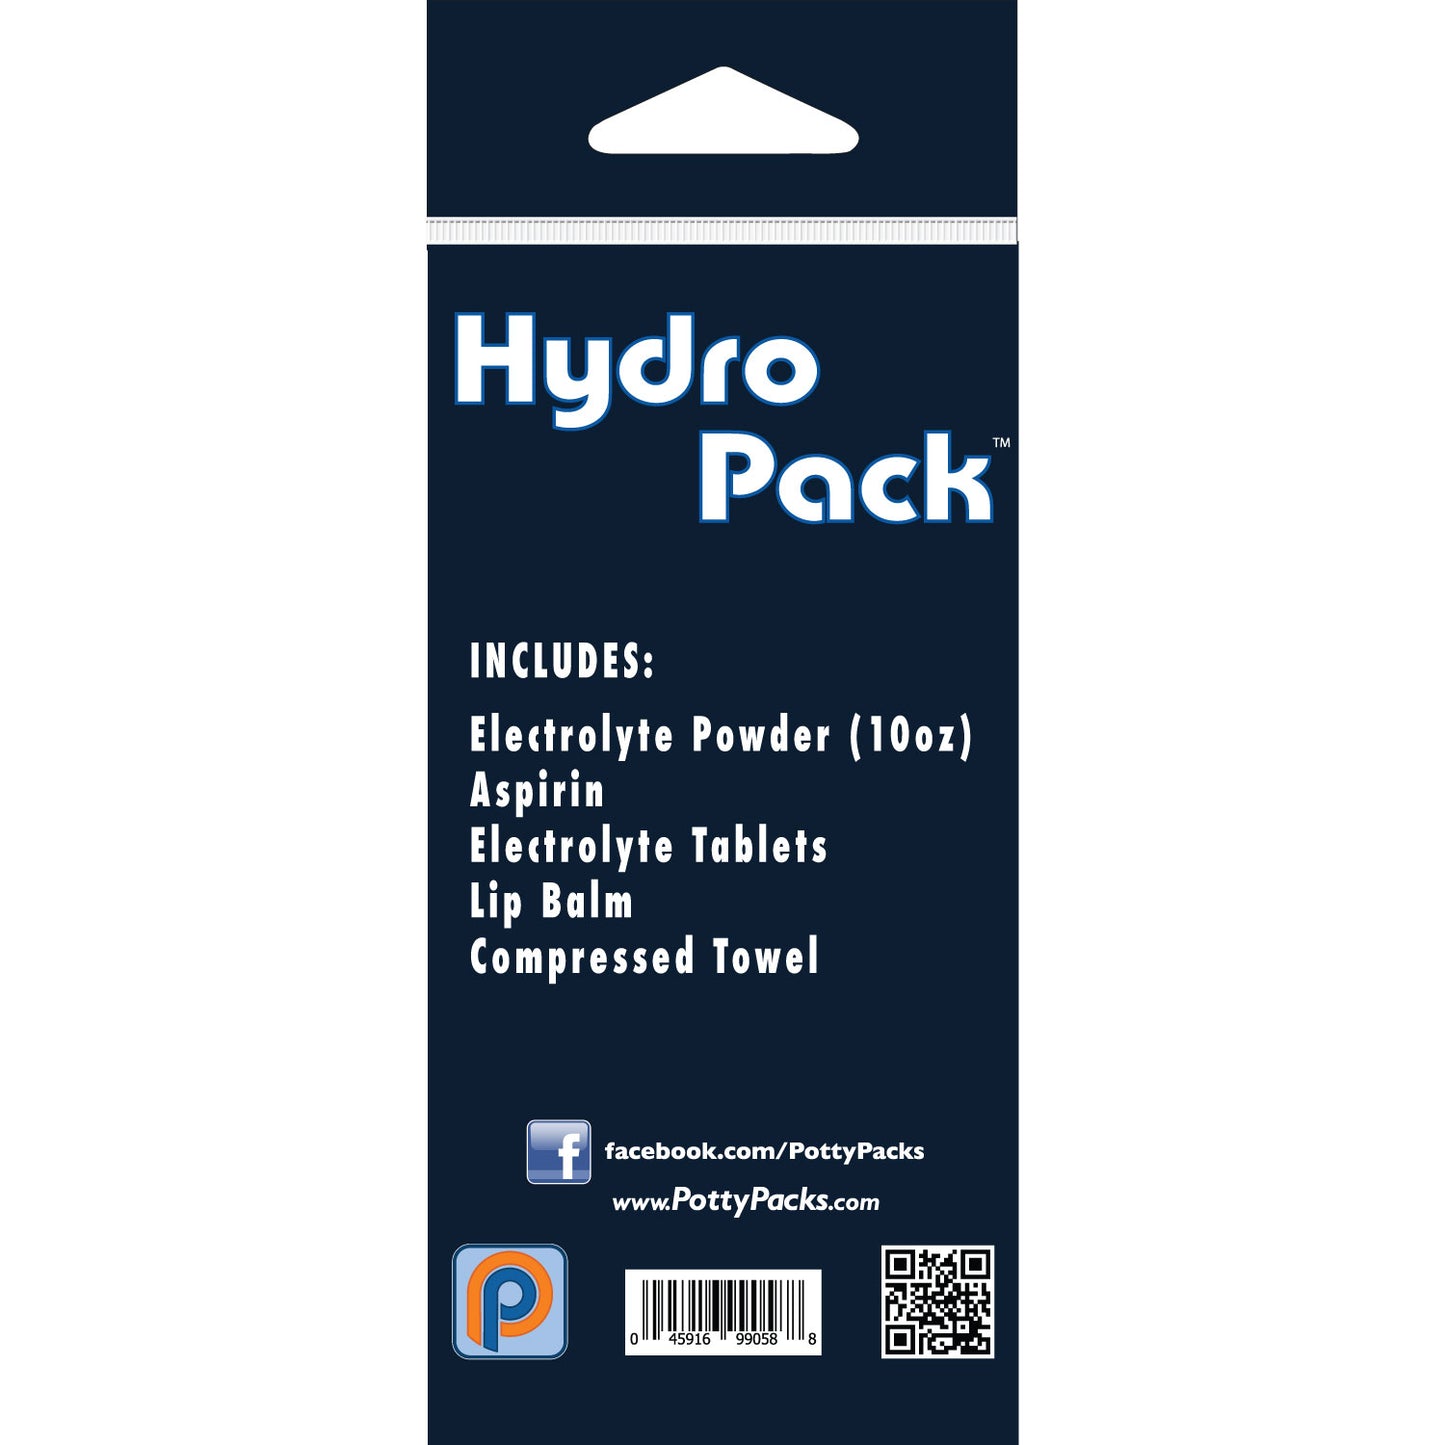 Hydro Pack